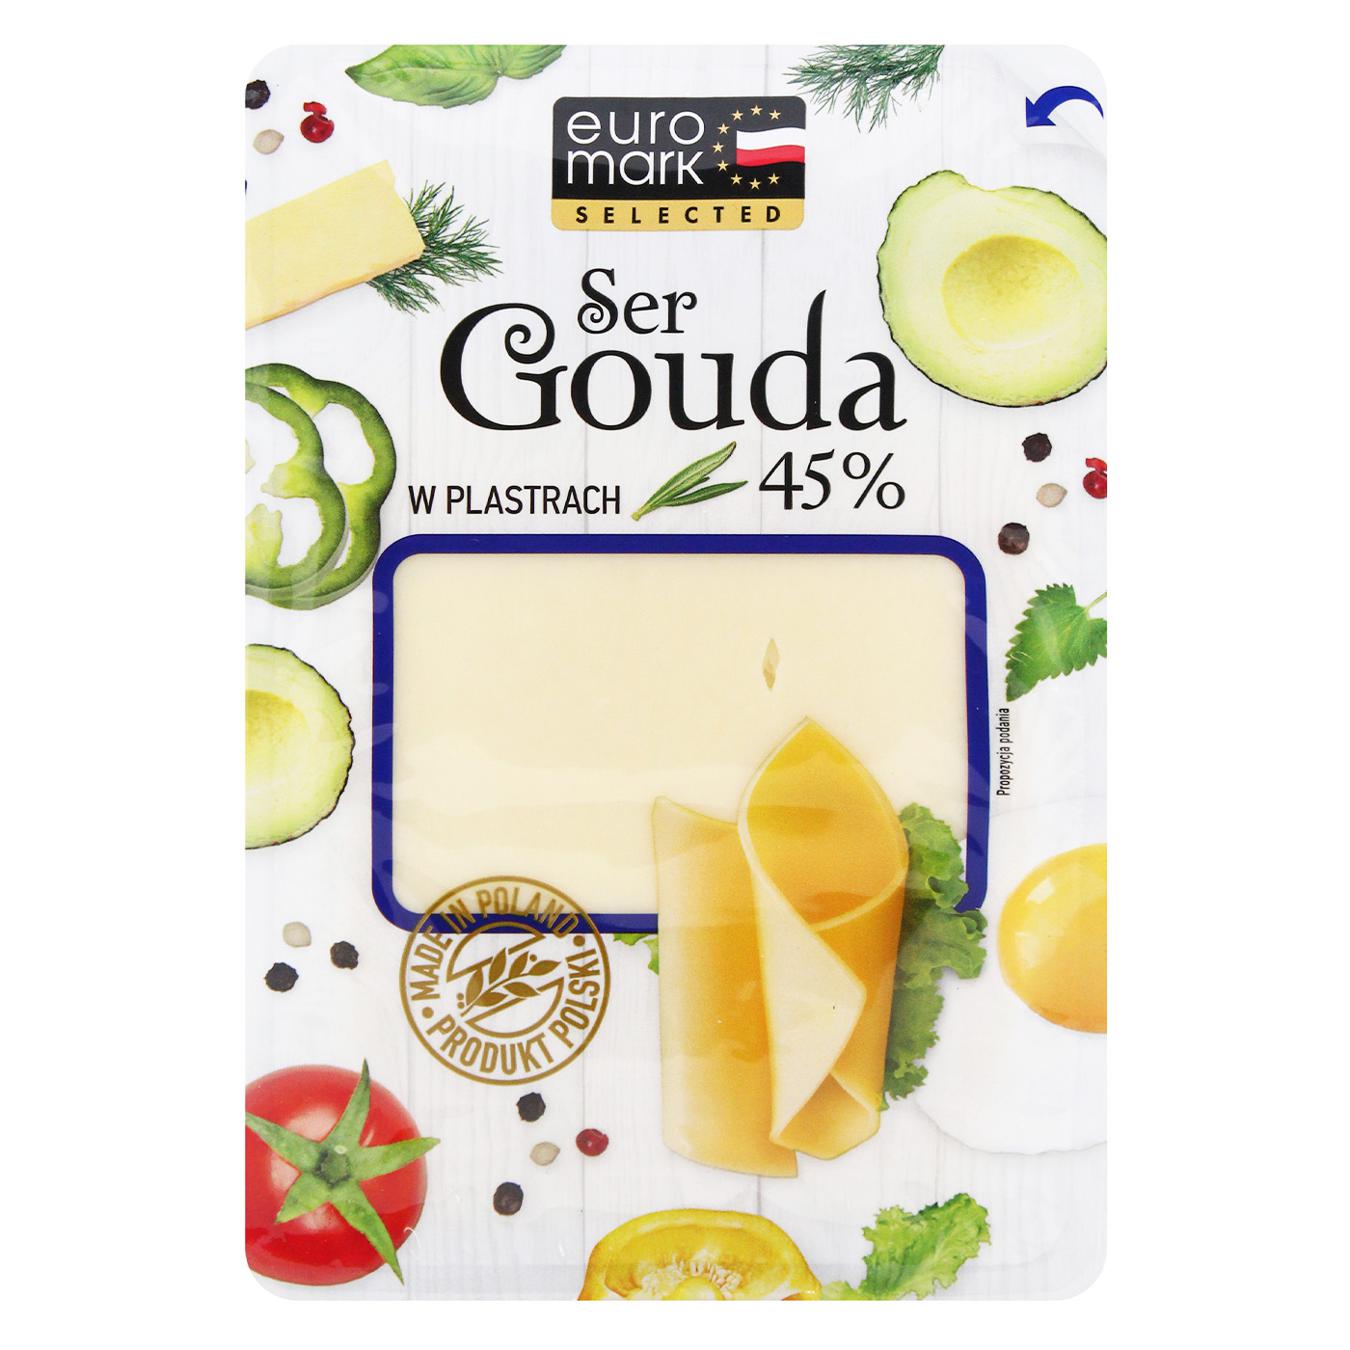 Serenada rennet cheese semi-hard Gouda 45% 150g